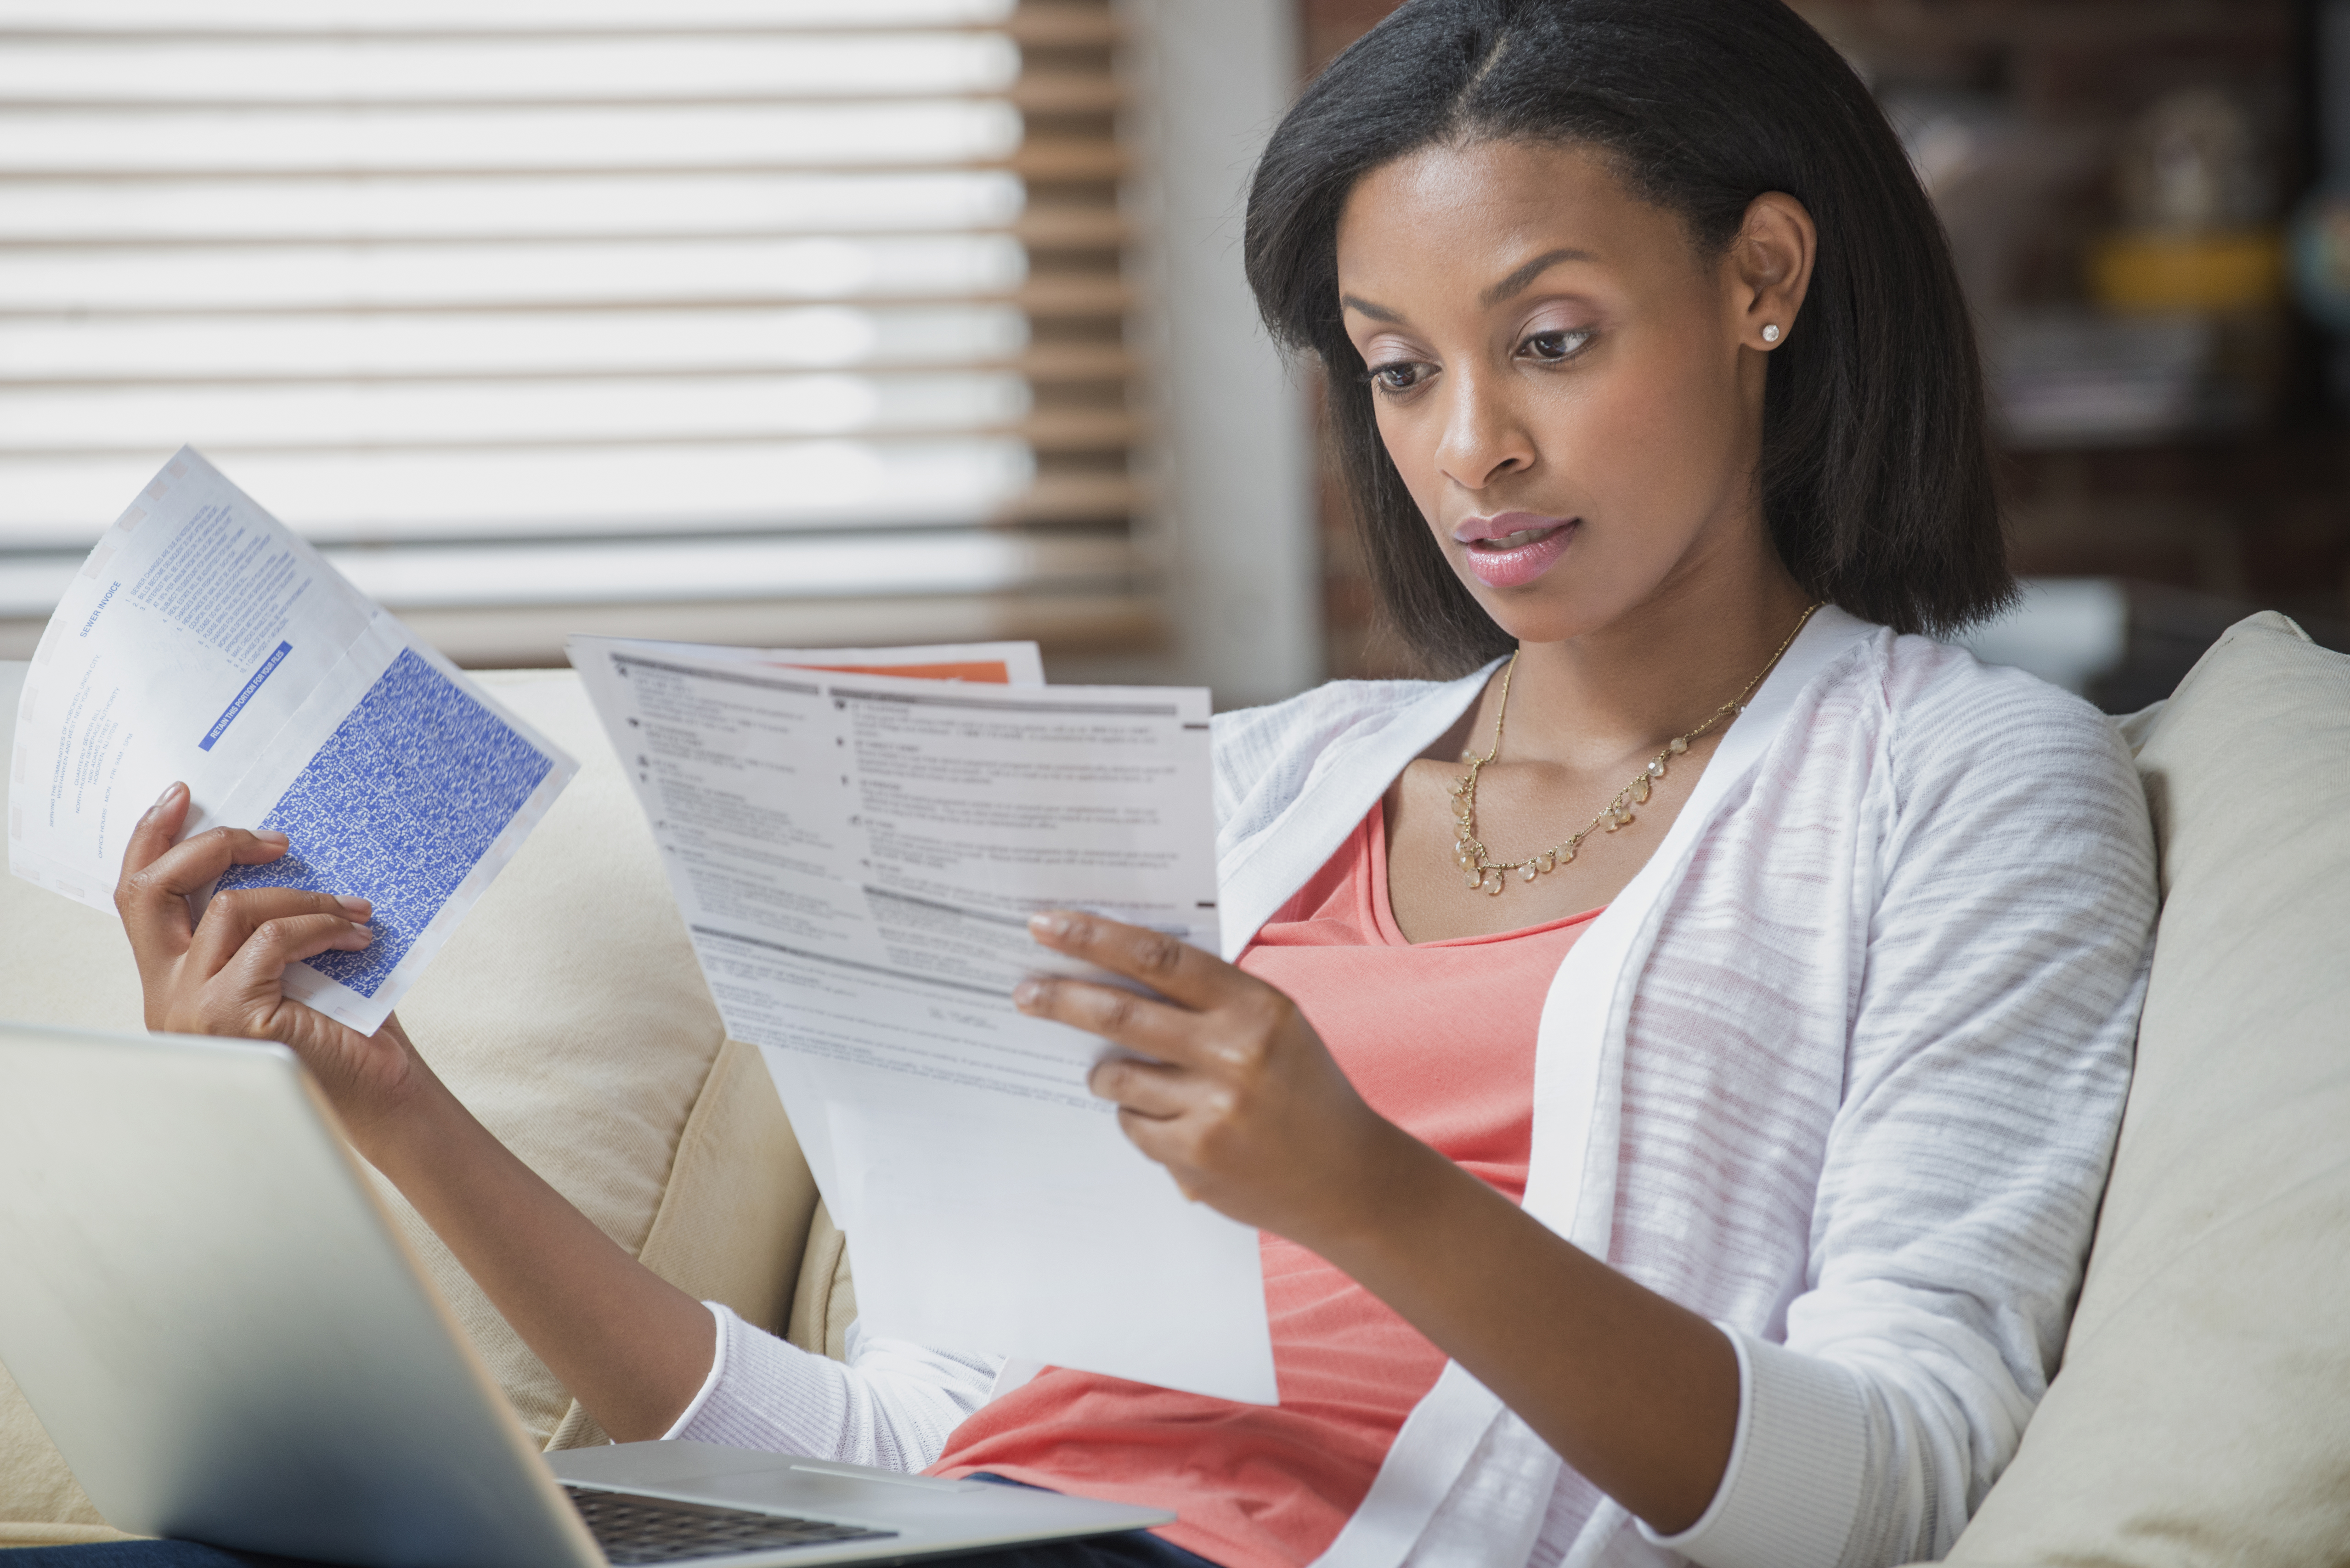 Mixed race woman reading bills on sofa